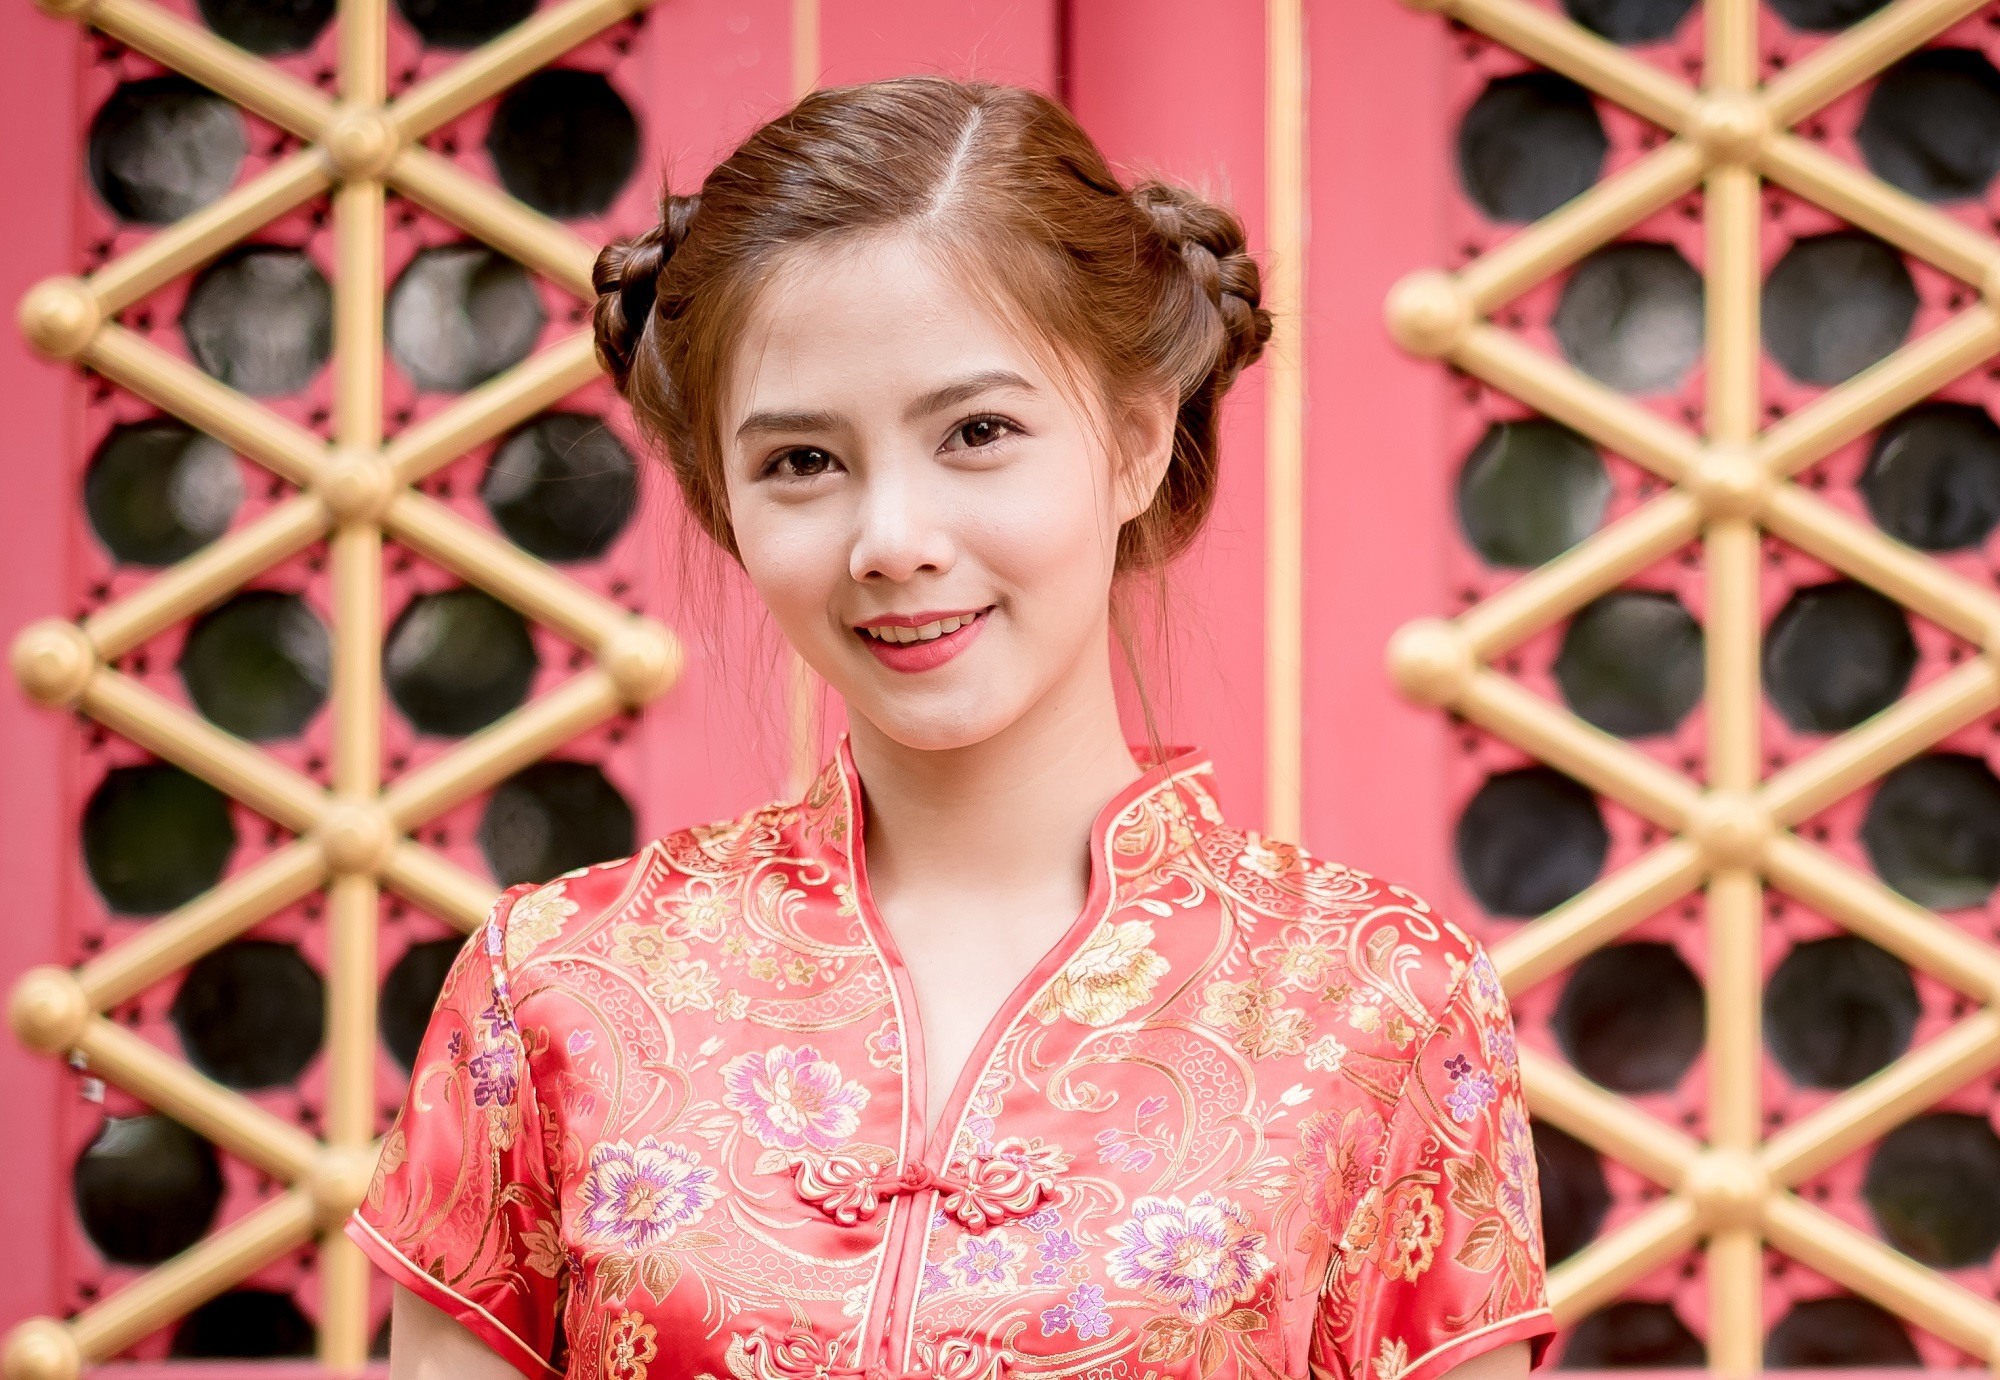 Chinese Staircase Braid - Cute Girls Hairstyles